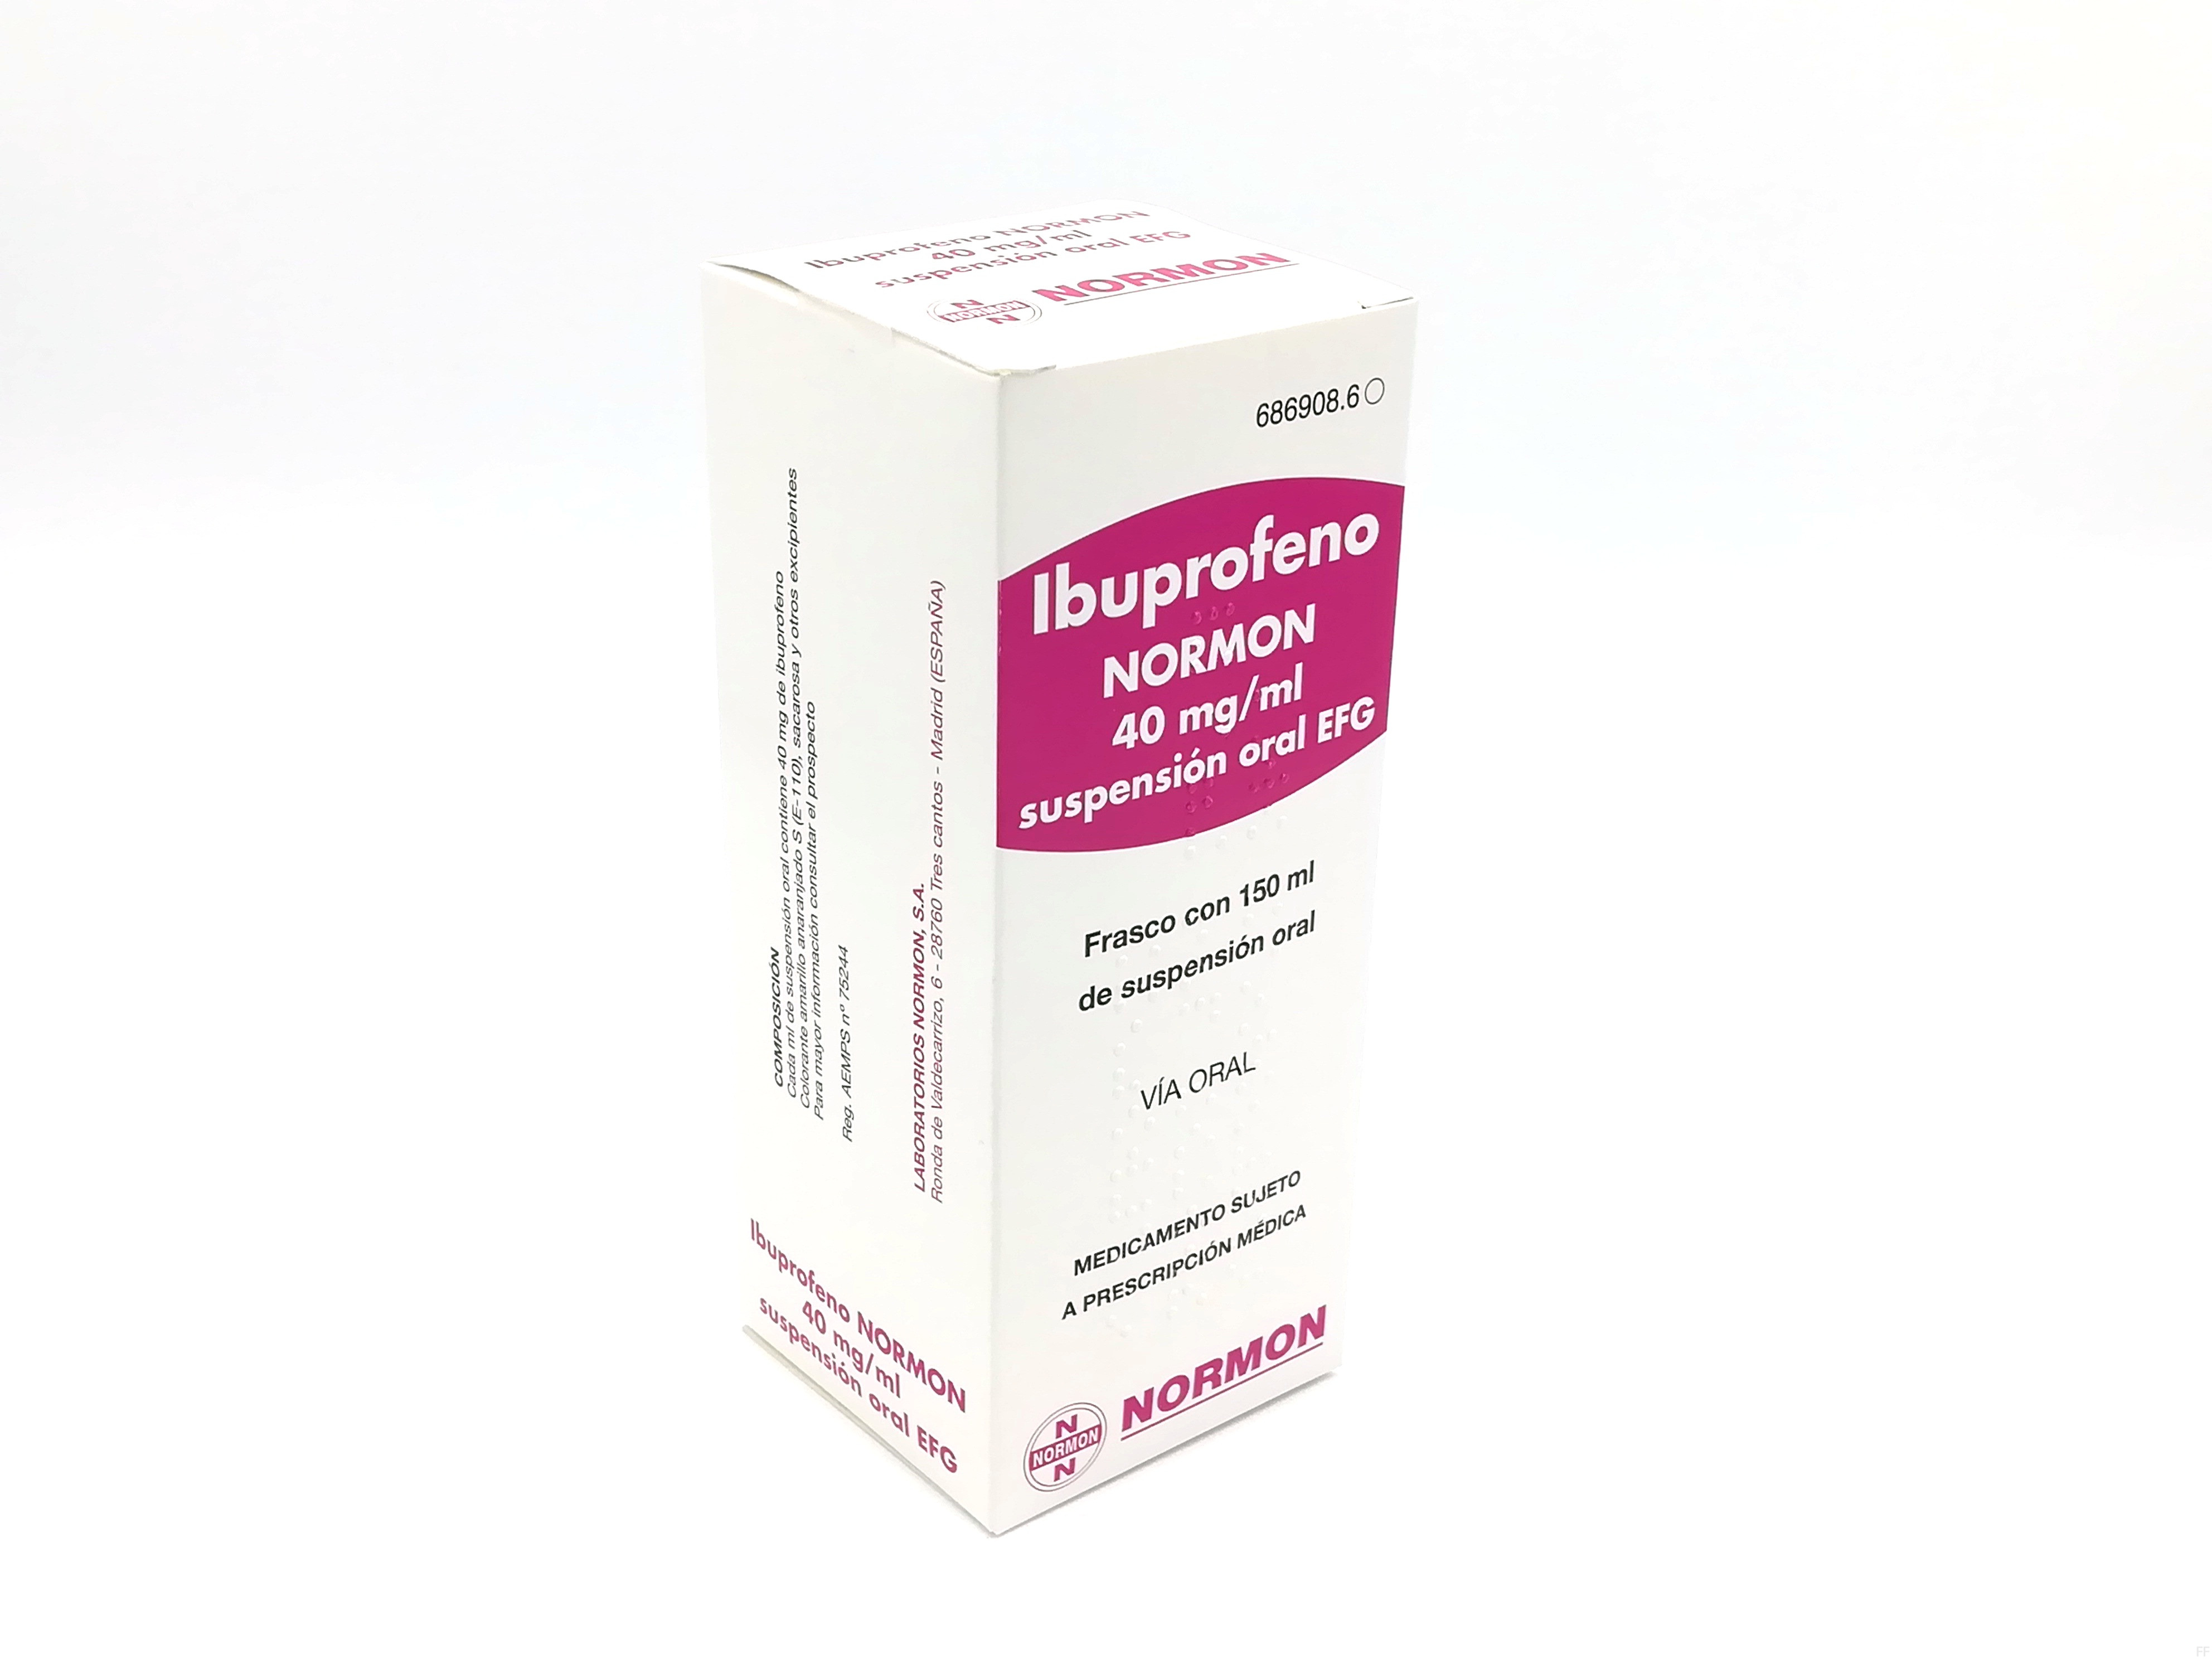 Ibuprofeno normon 40 mg/ml